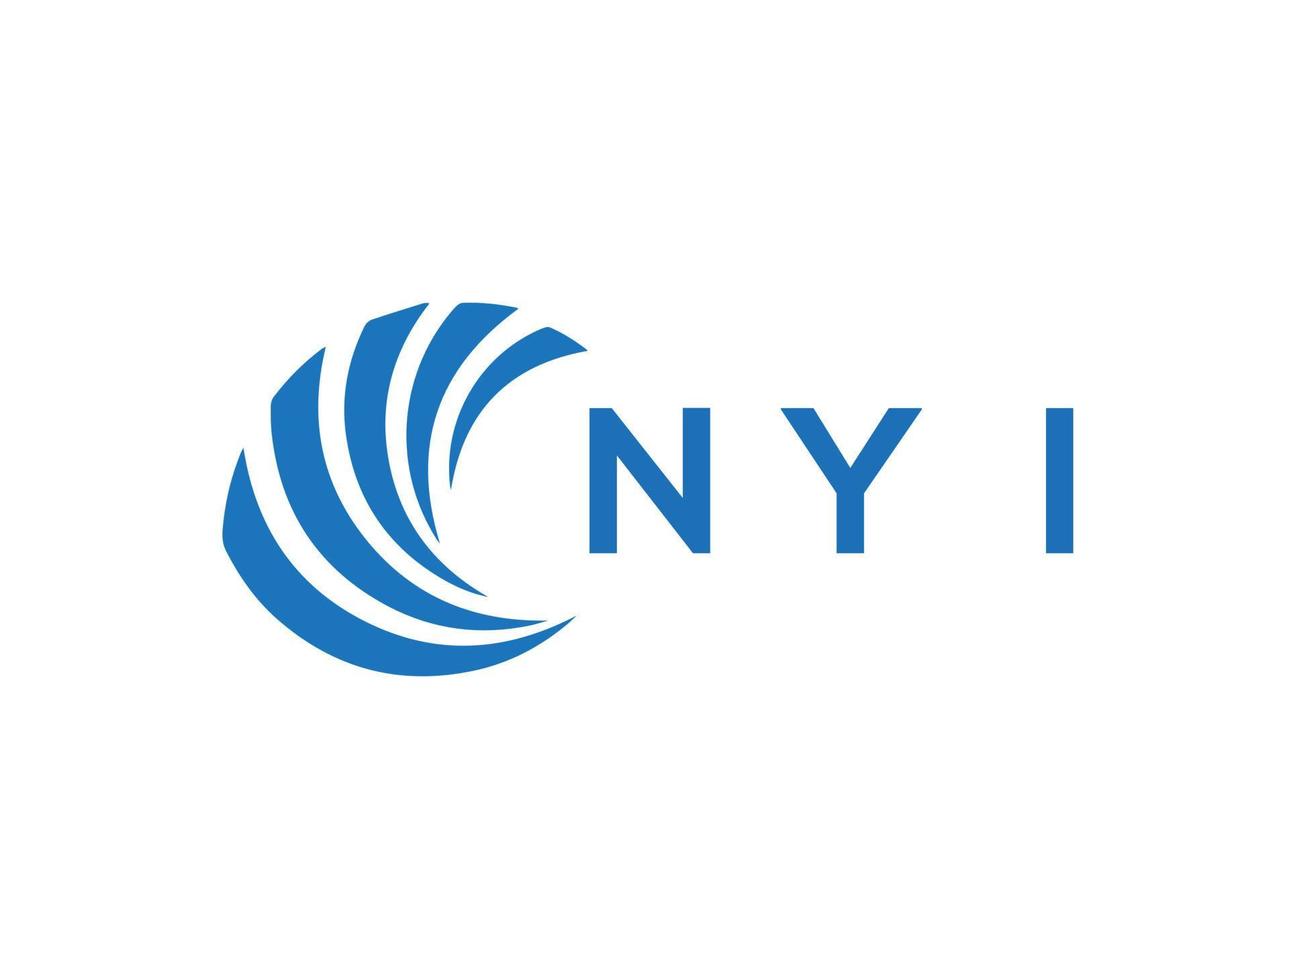 NYI creative circle letter logo concept. NYI letter design.NYI letter logo design on white background. NYI creative circle letter logo concept. NYI letter design. vector